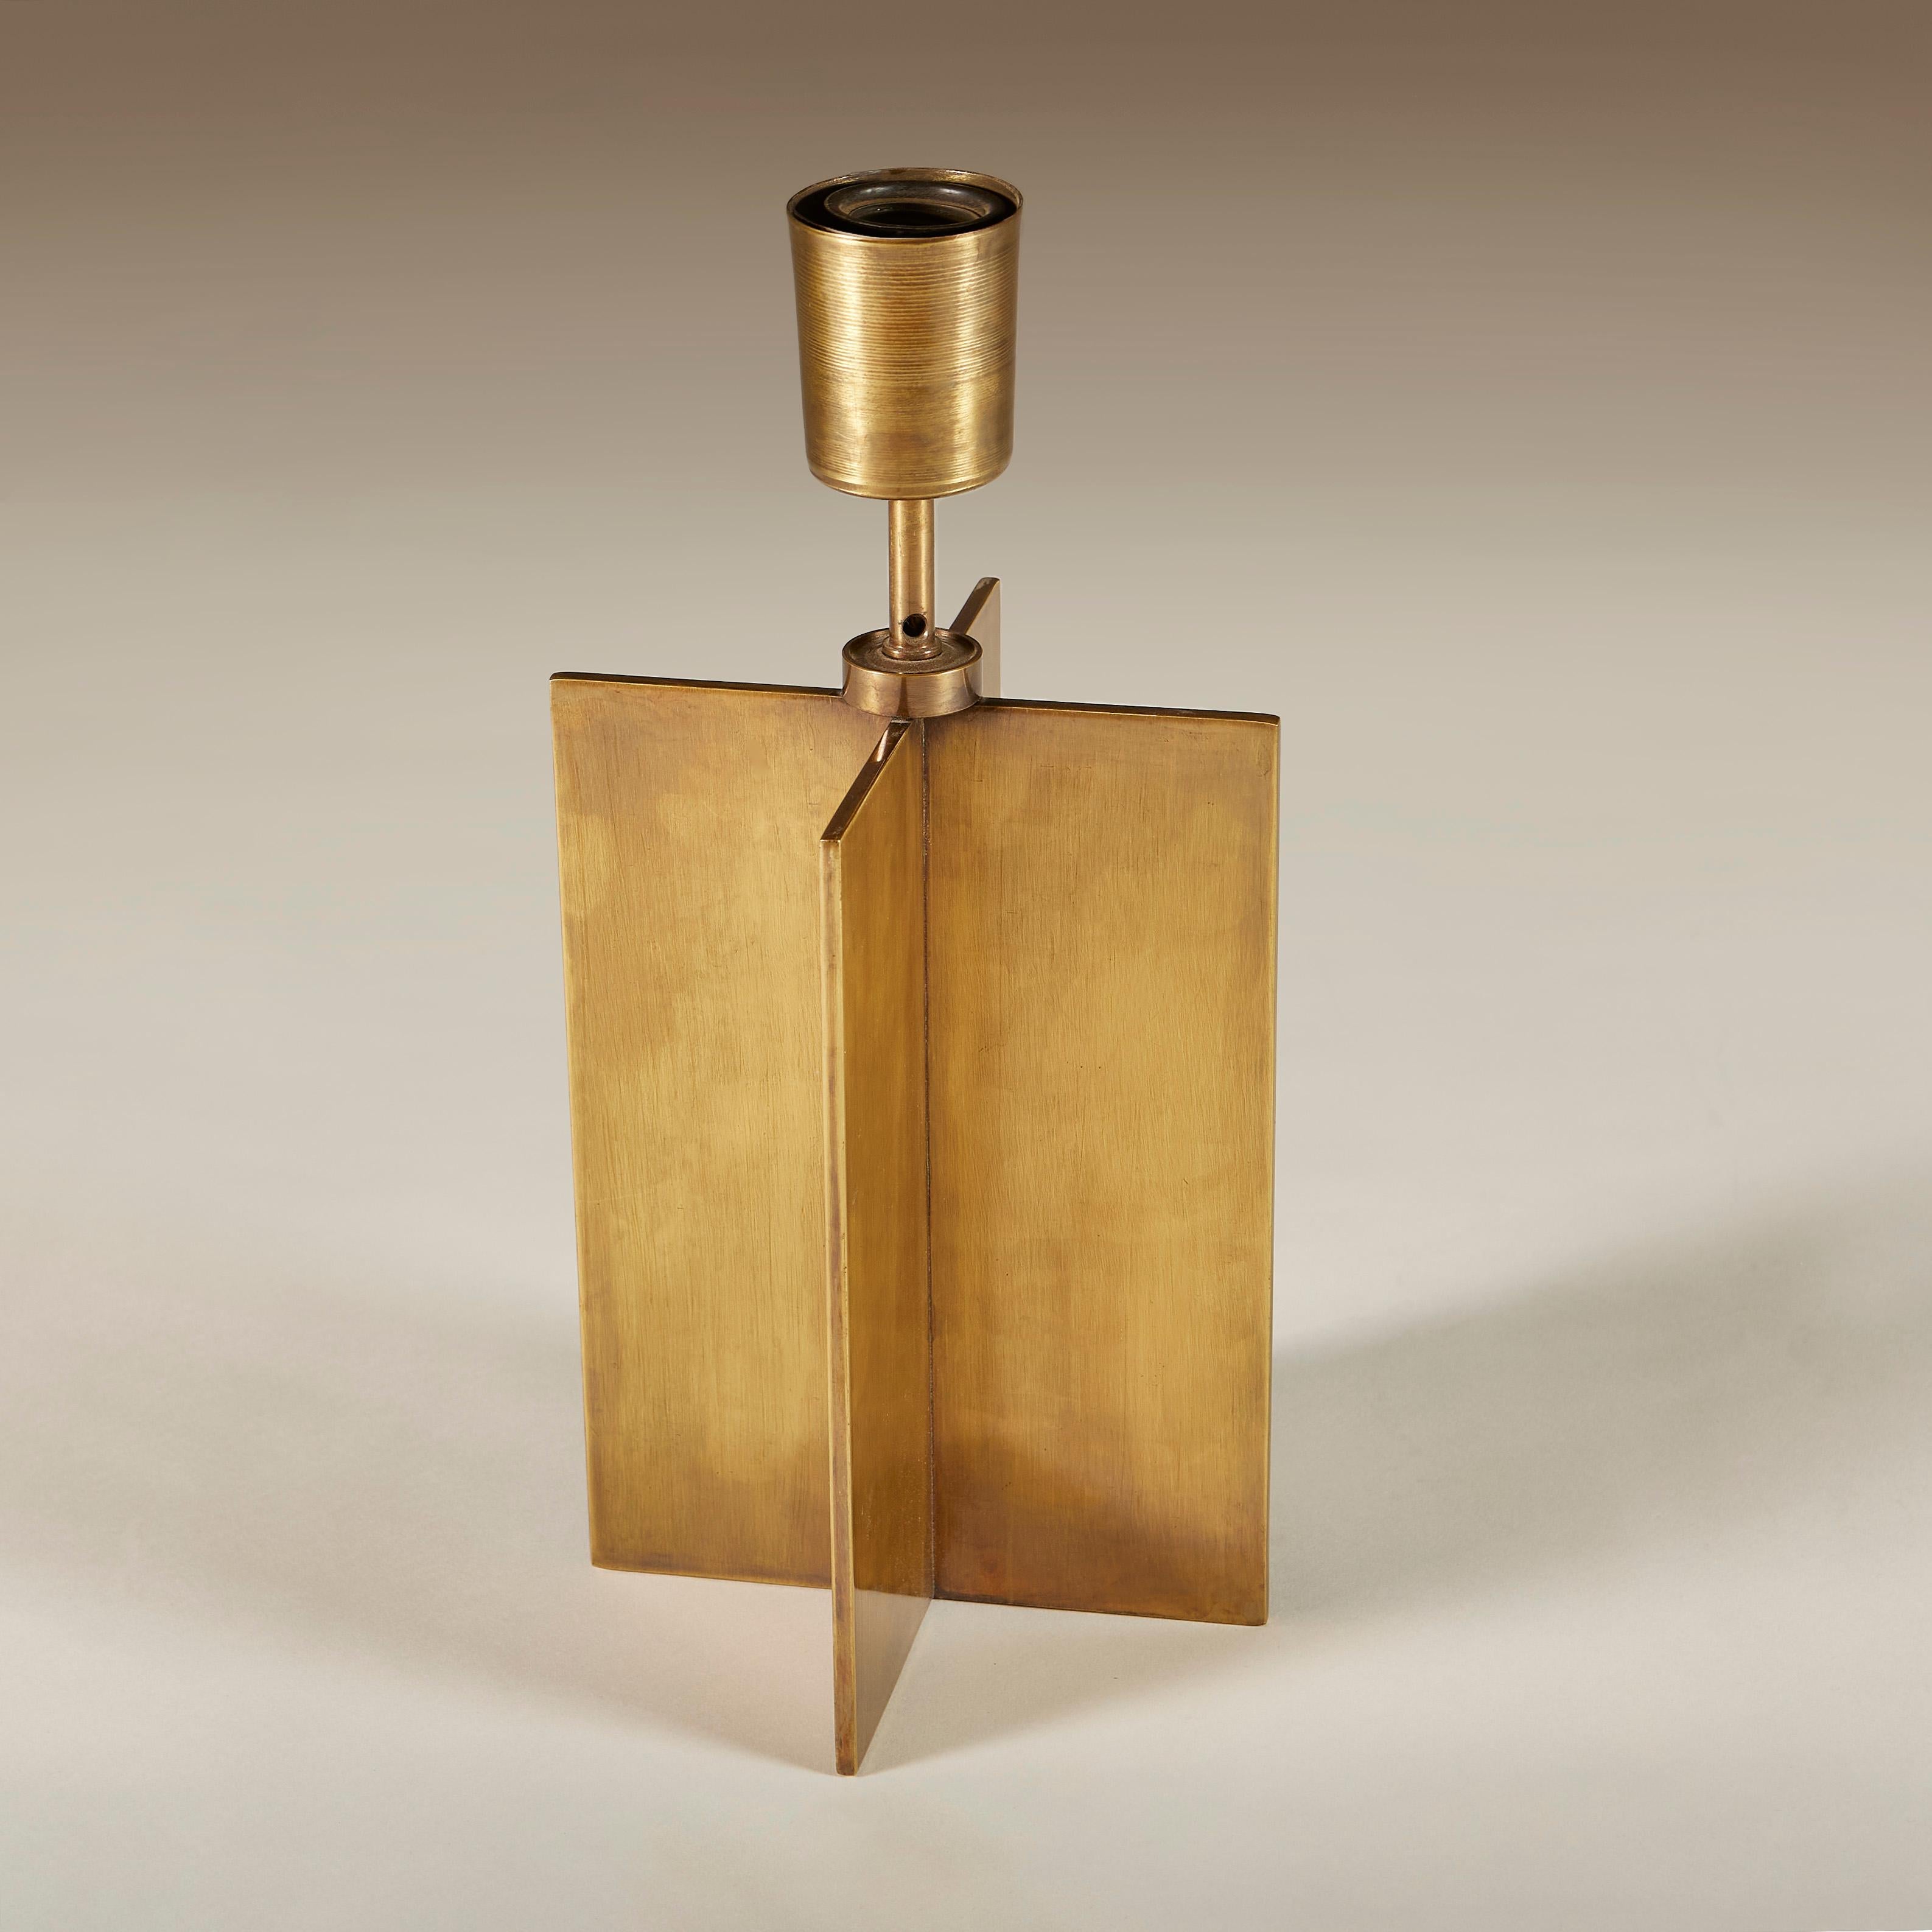 Pair of Original Jean-Michel Frank “Croisillon” Bronze Table Lamps, circa 1935 For Sale 1